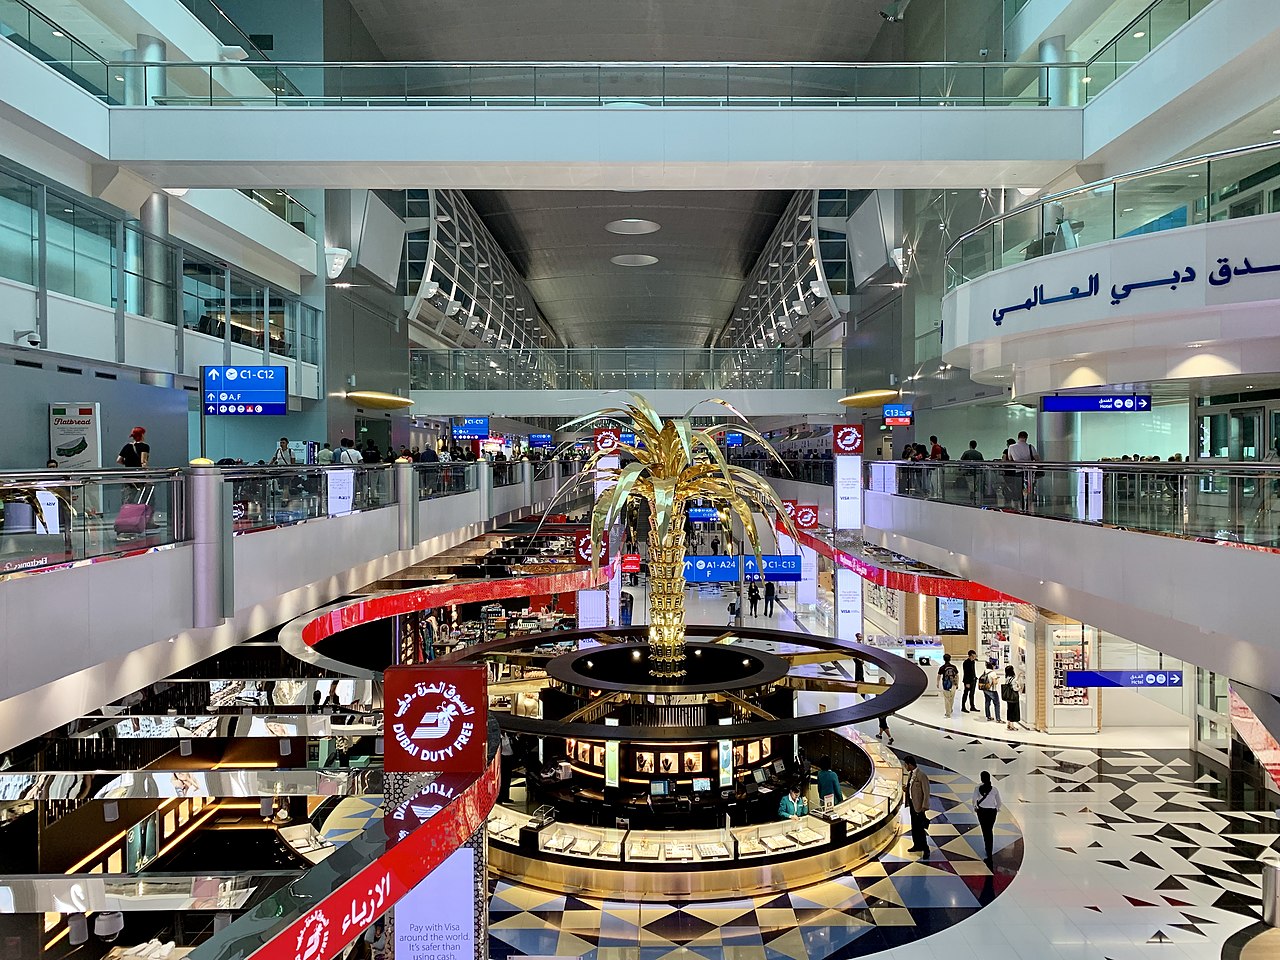 Inside Dubai International Airport Emirates Terminal 3 with its famous gold palm tree kiosk selling gold jewellery close to Dubai duty free